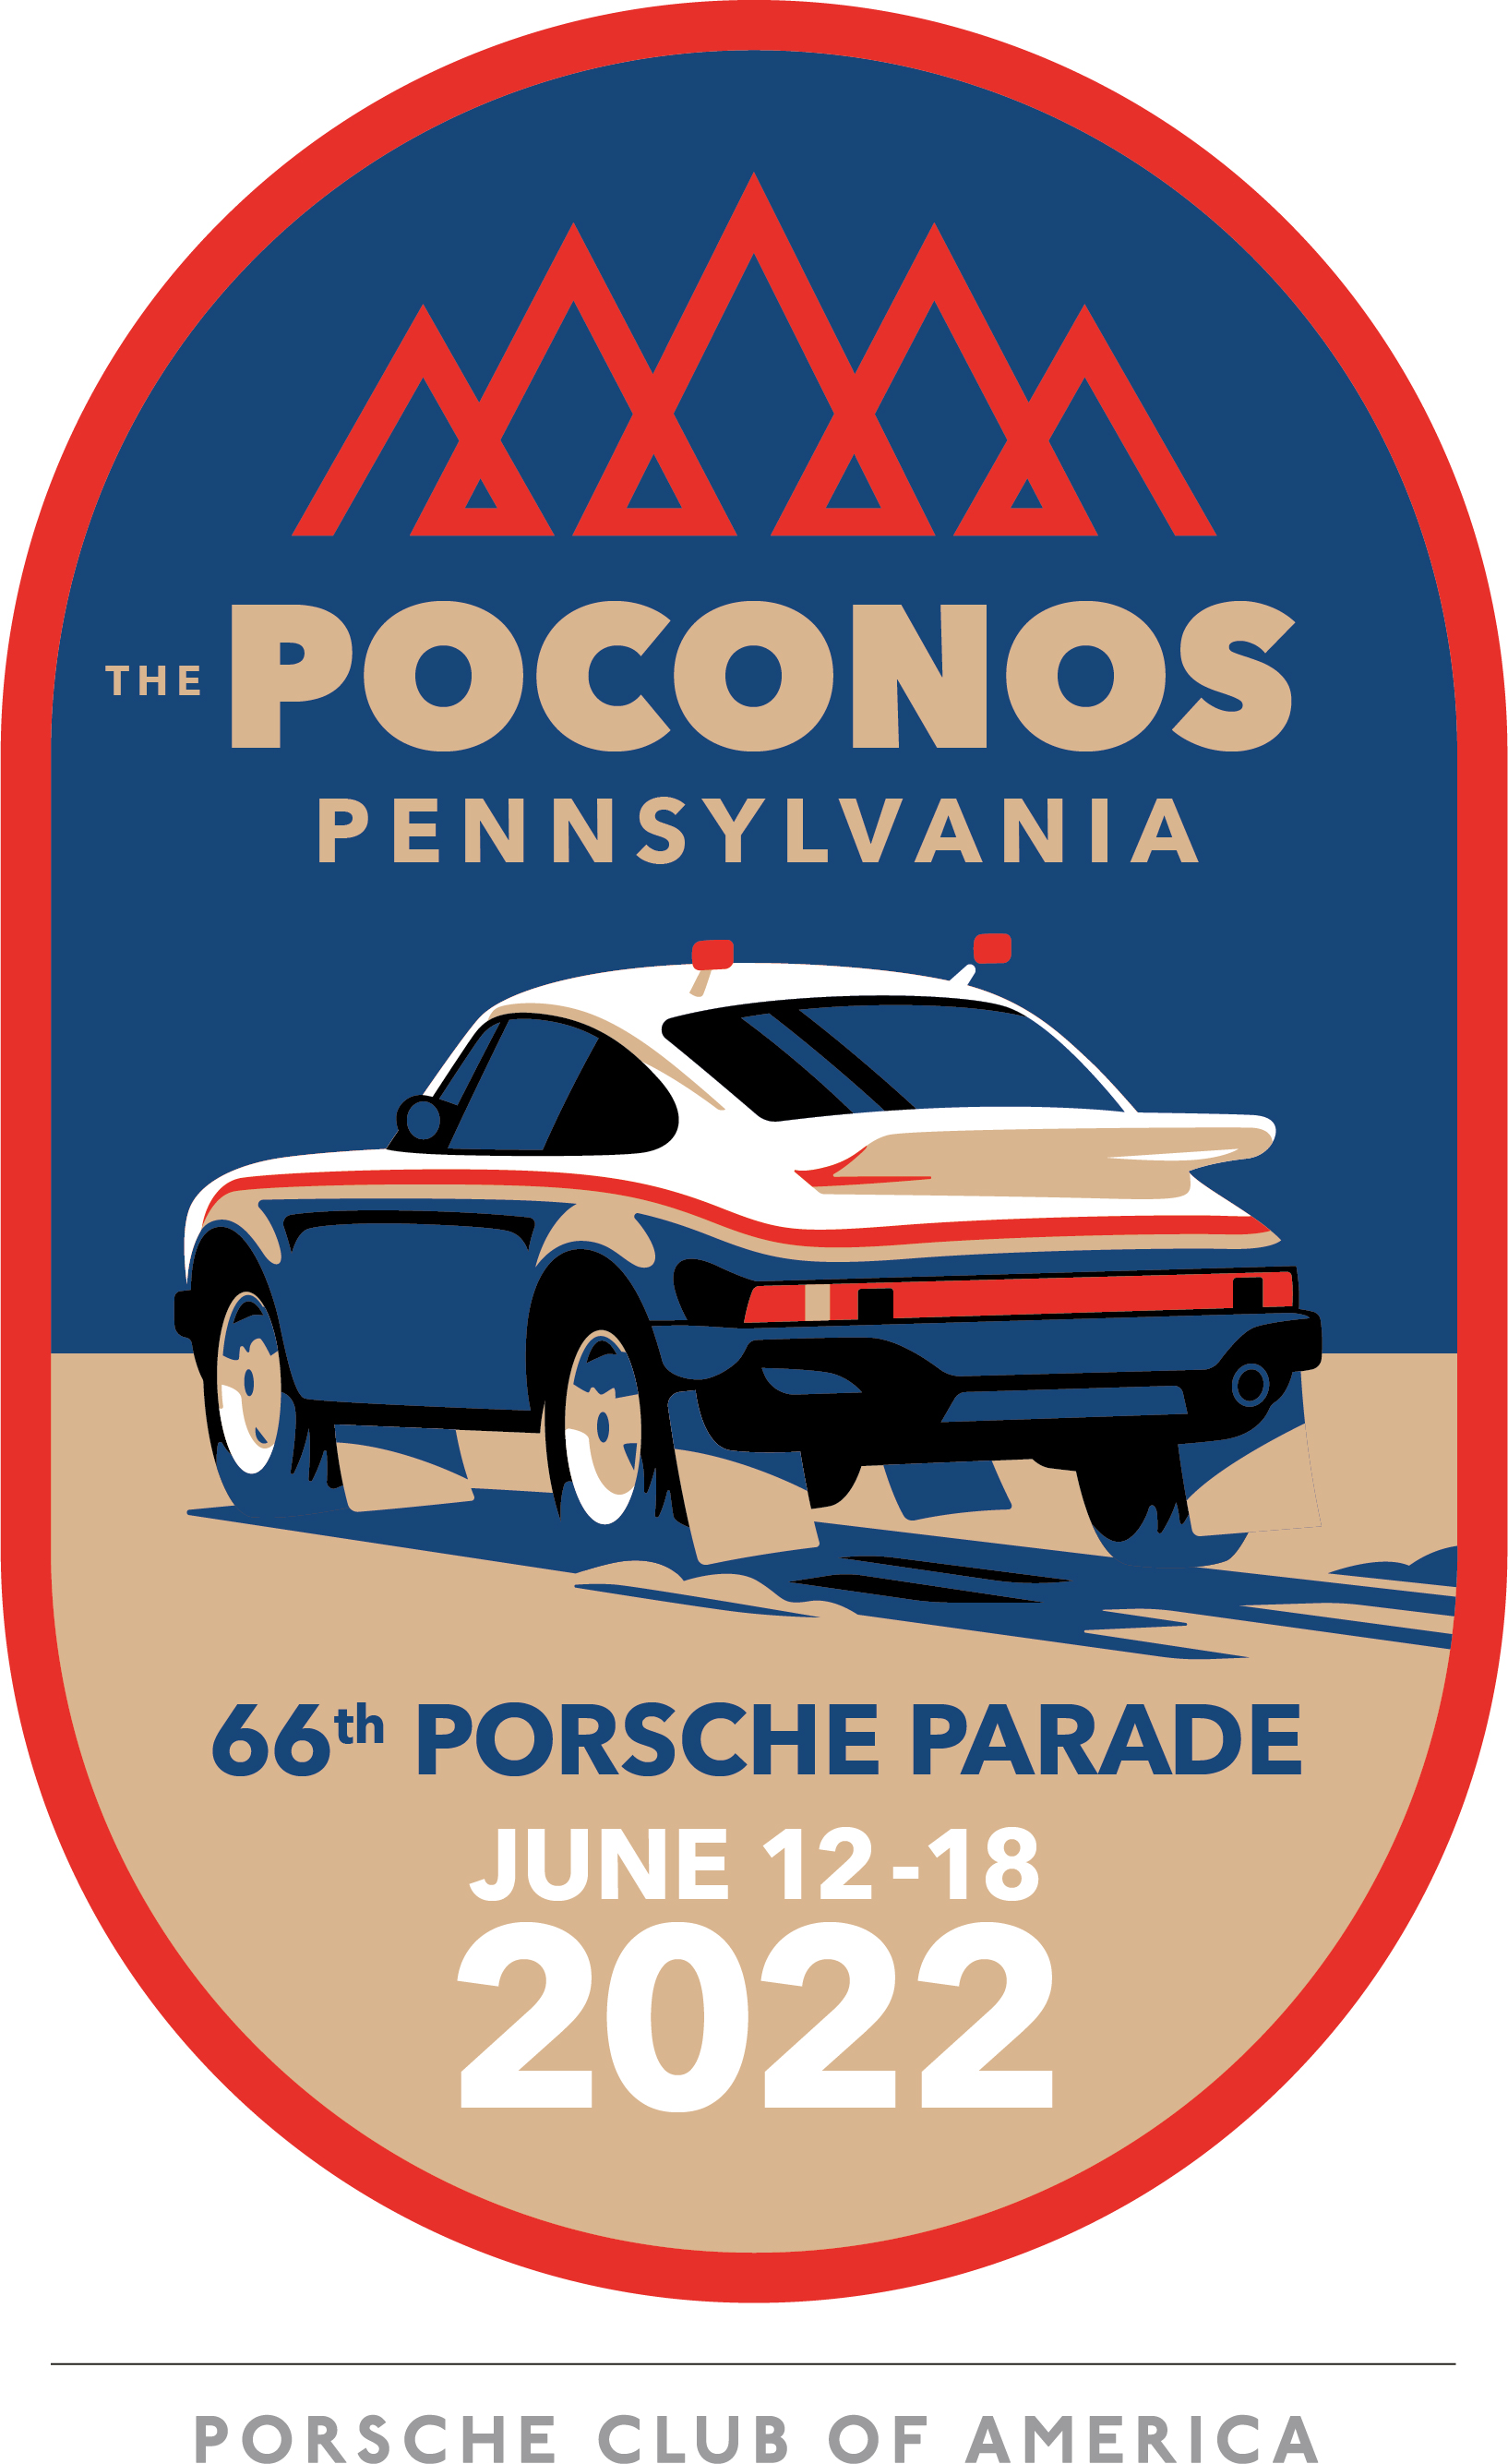 Porsche Club of America Event - Porsche Parade 2022 - The Poconos Pennsylvania